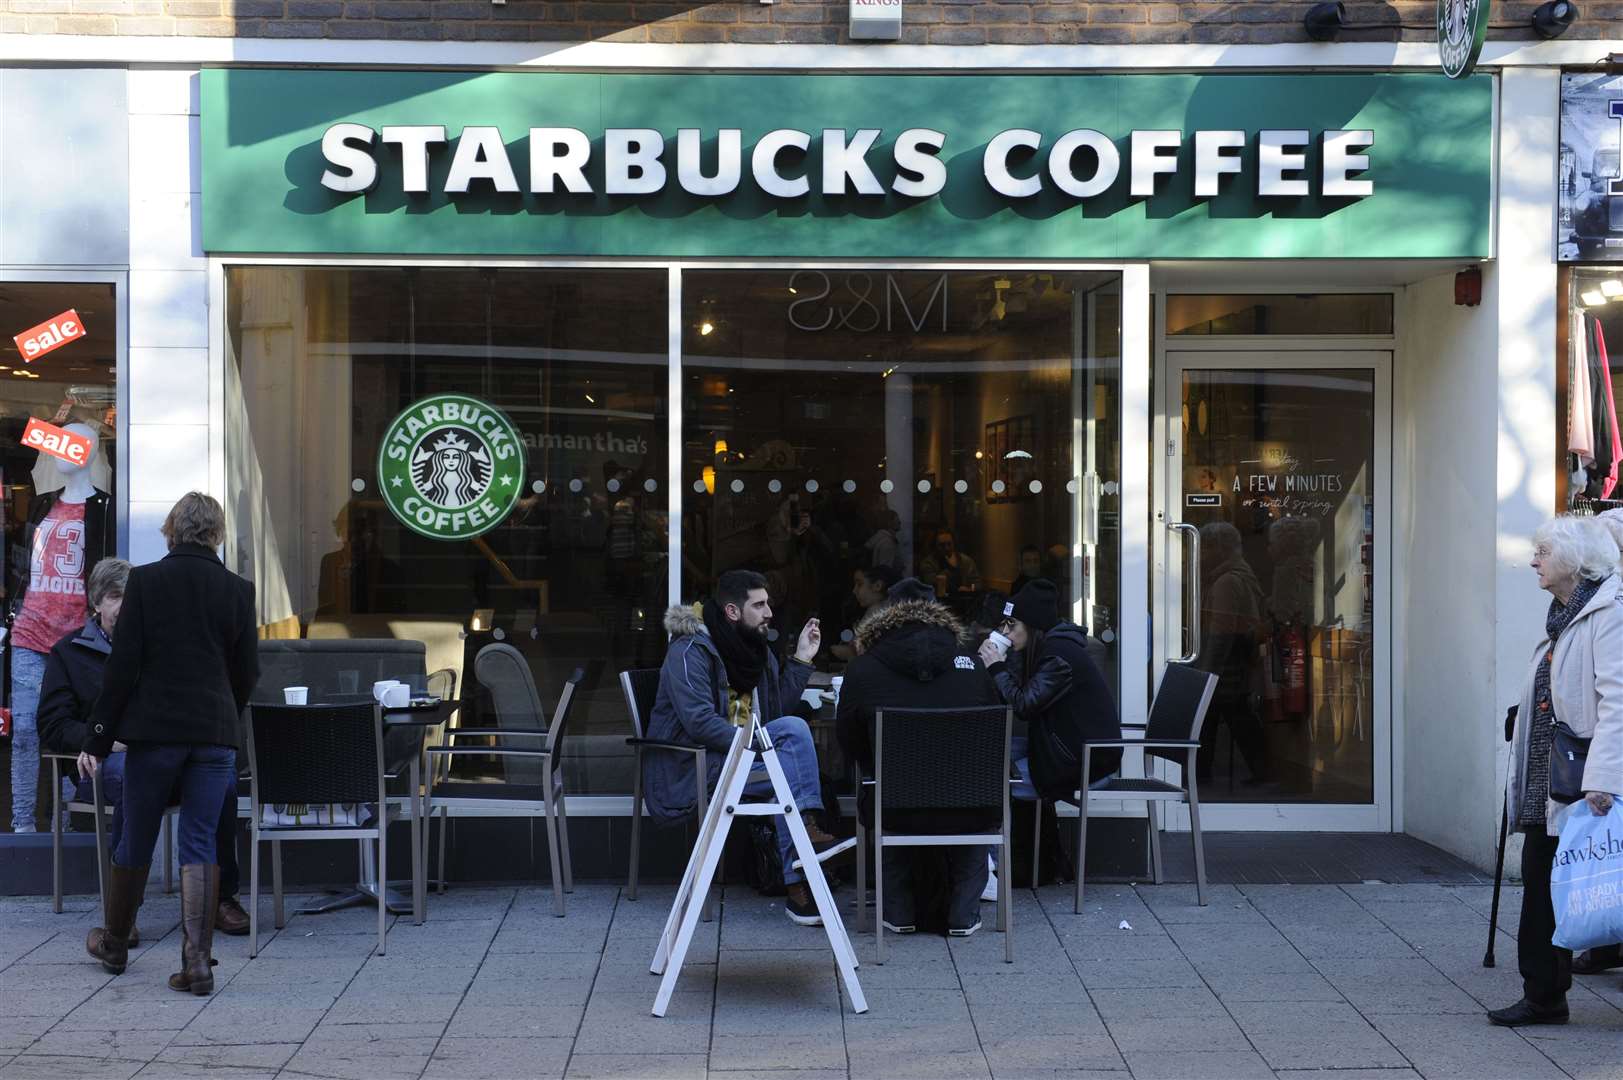 Sweetland groped a schoolgirl in Canterbury's Starbucks